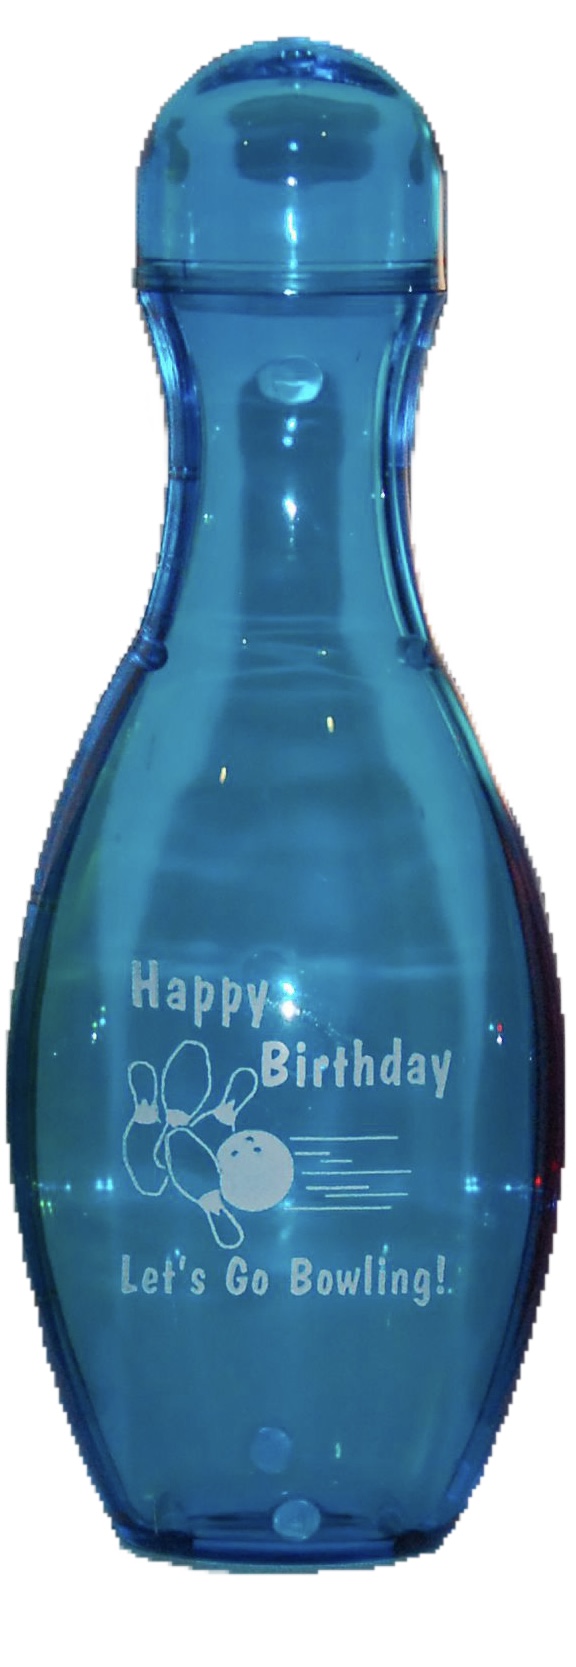 Birthday Bowling Pin Bank Blue